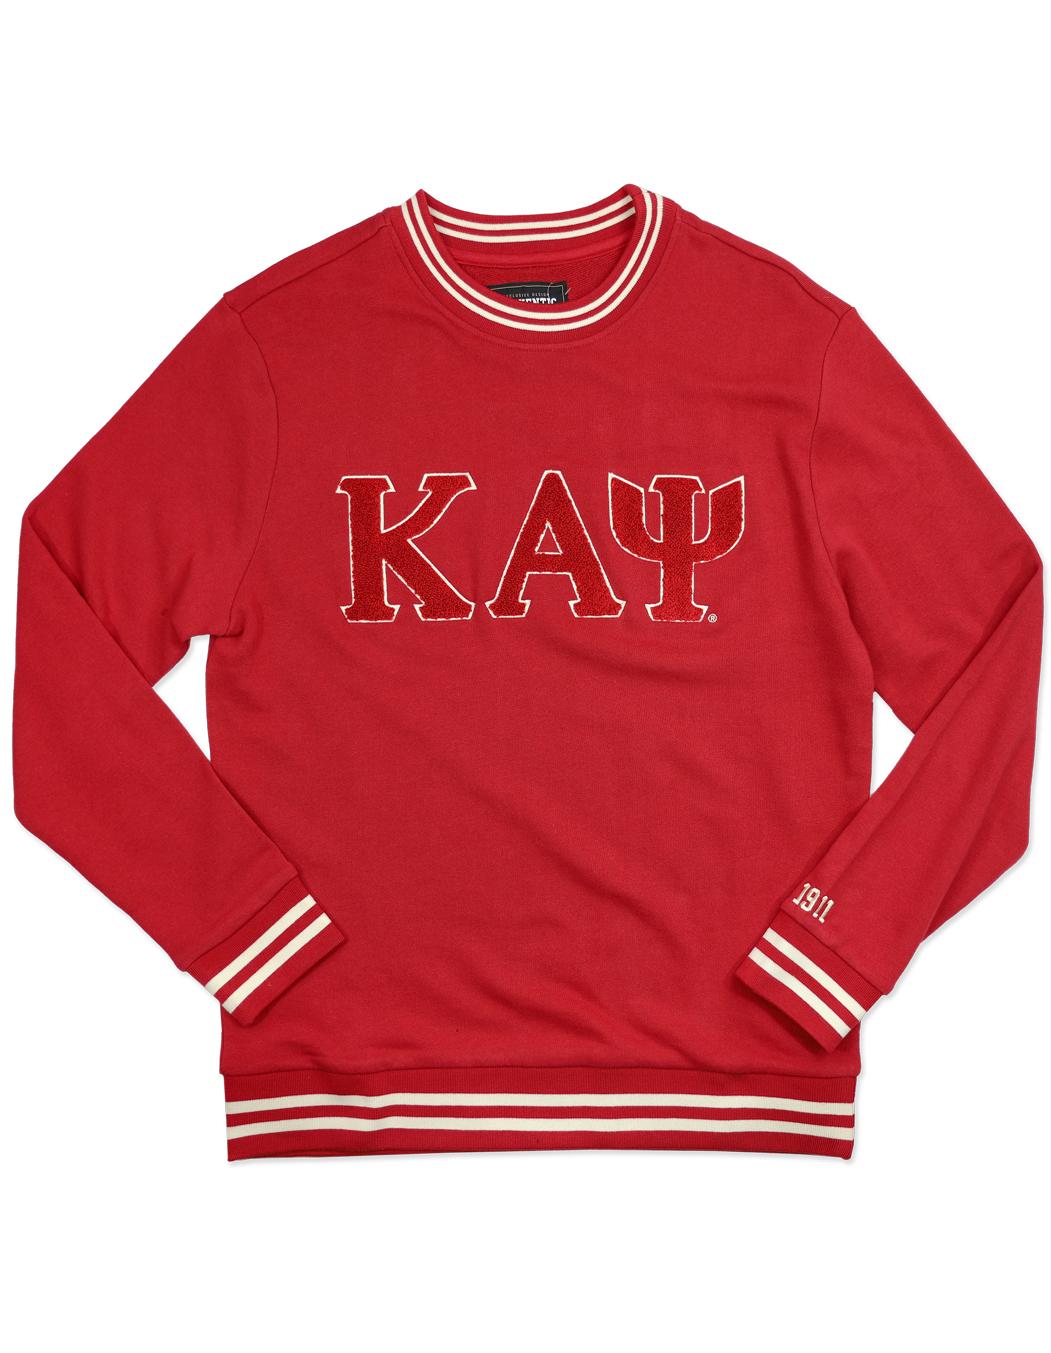 Kappa Alpha Psi apparel Sweatshirt